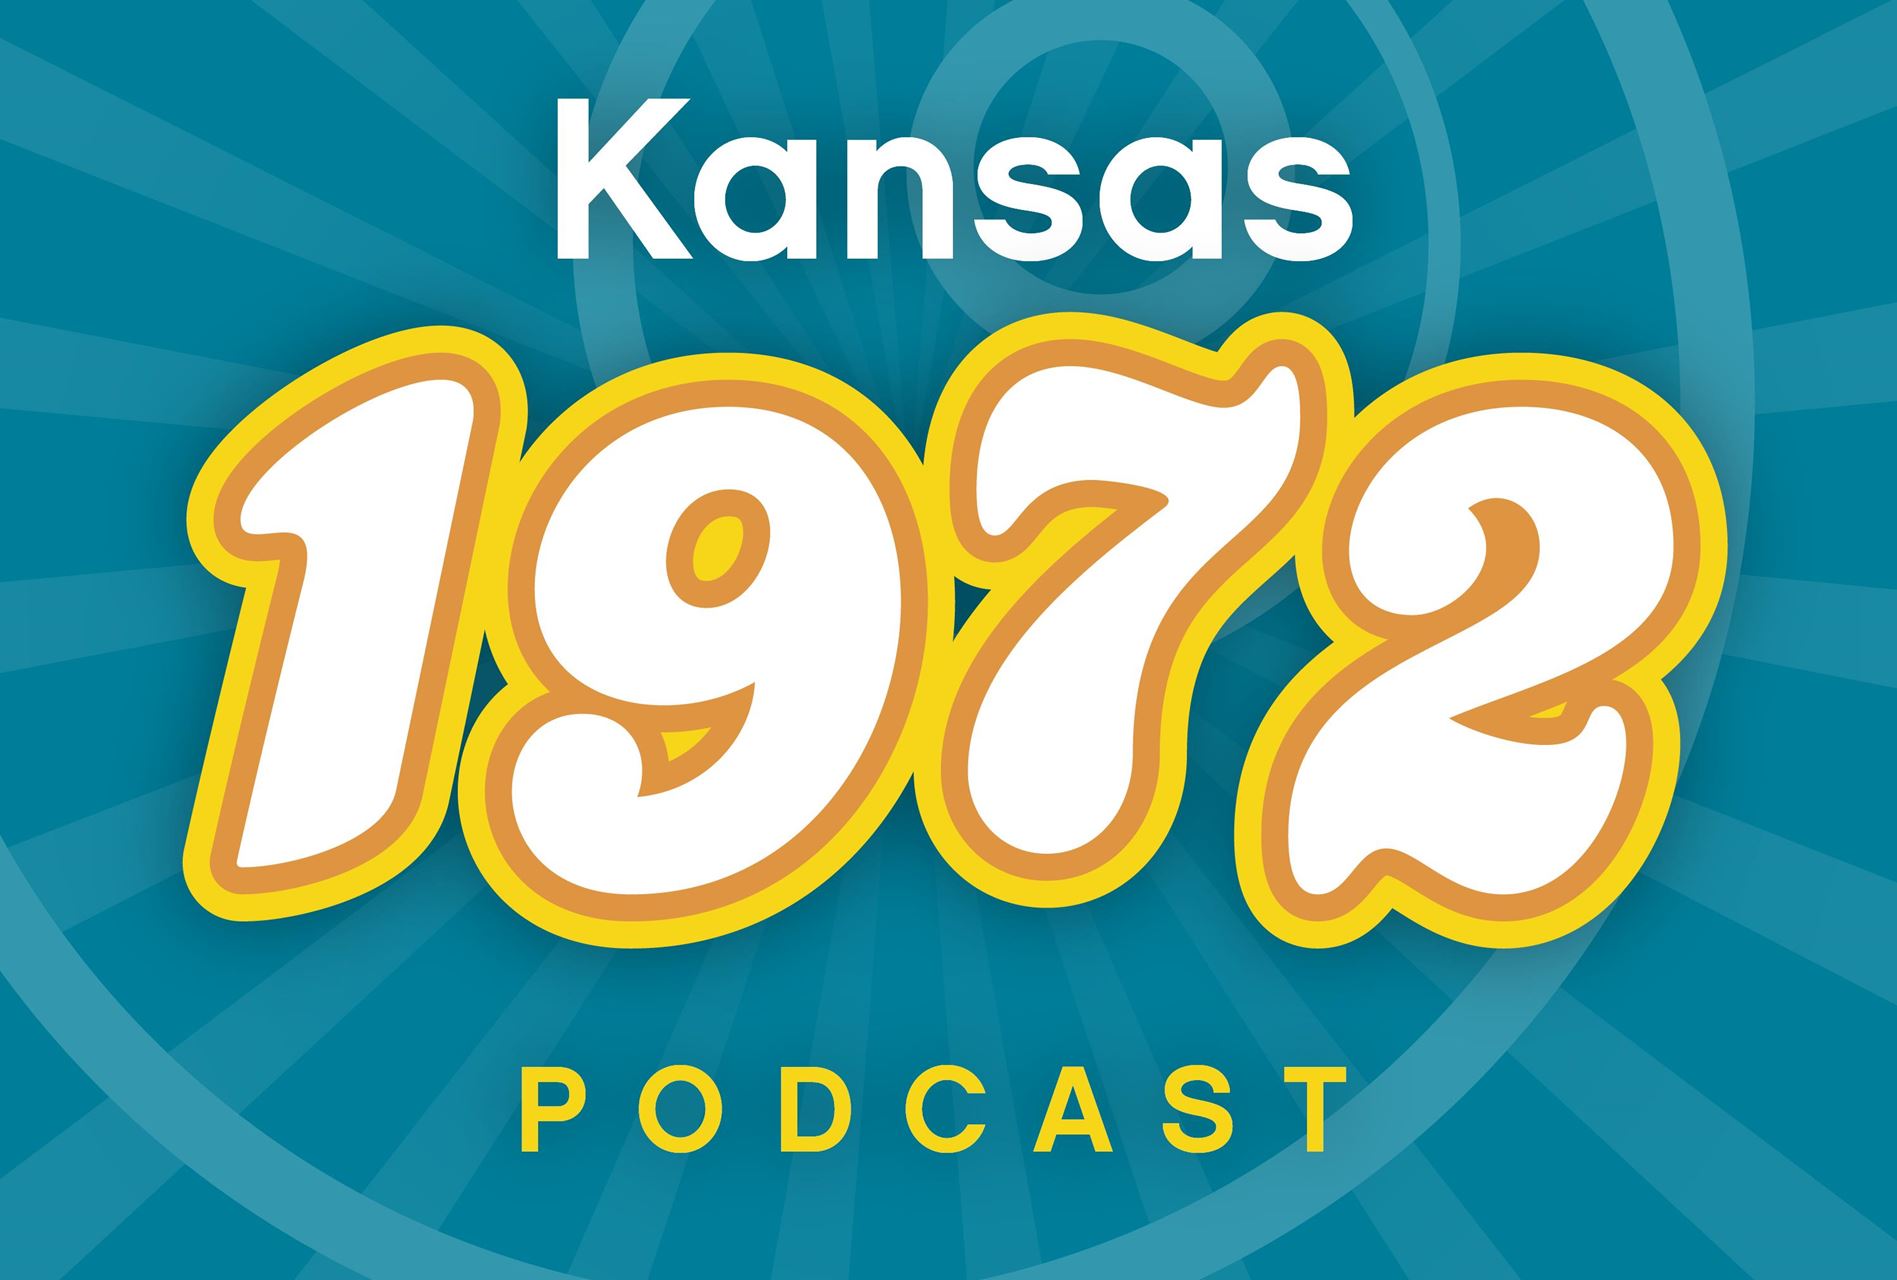 Kansas 1972 podcast title